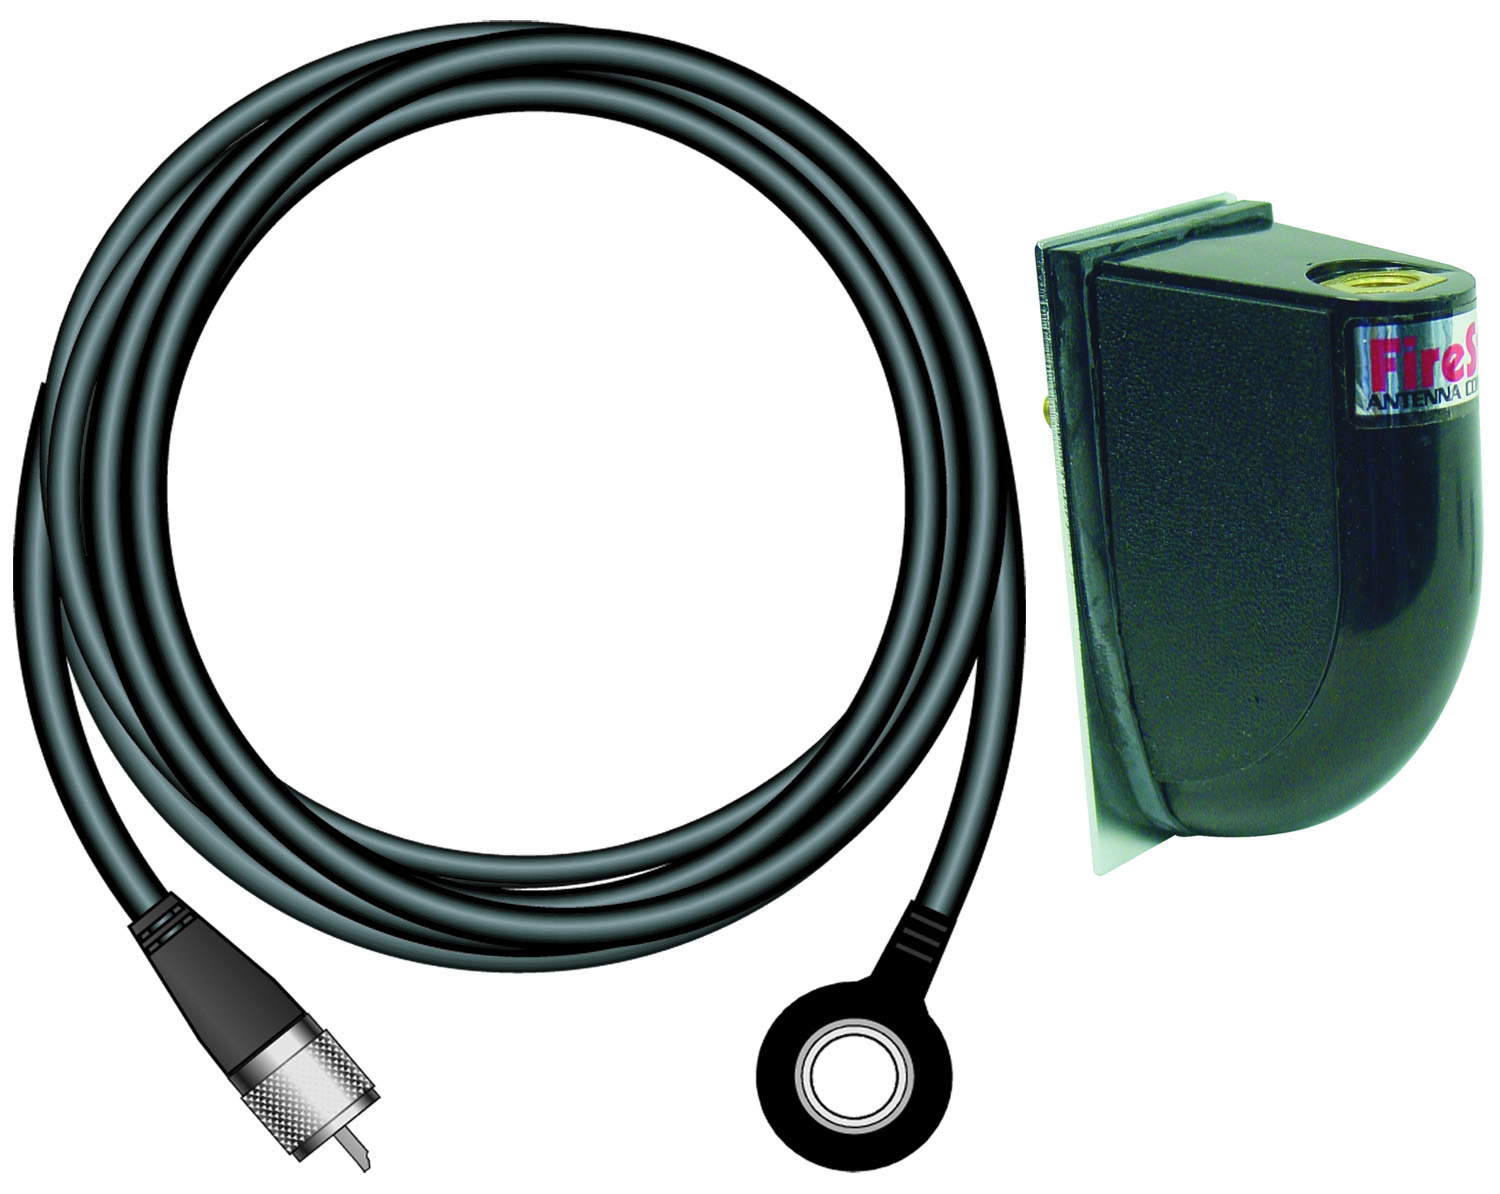 Firestik MK-M2 Sidemount inclusief kabel